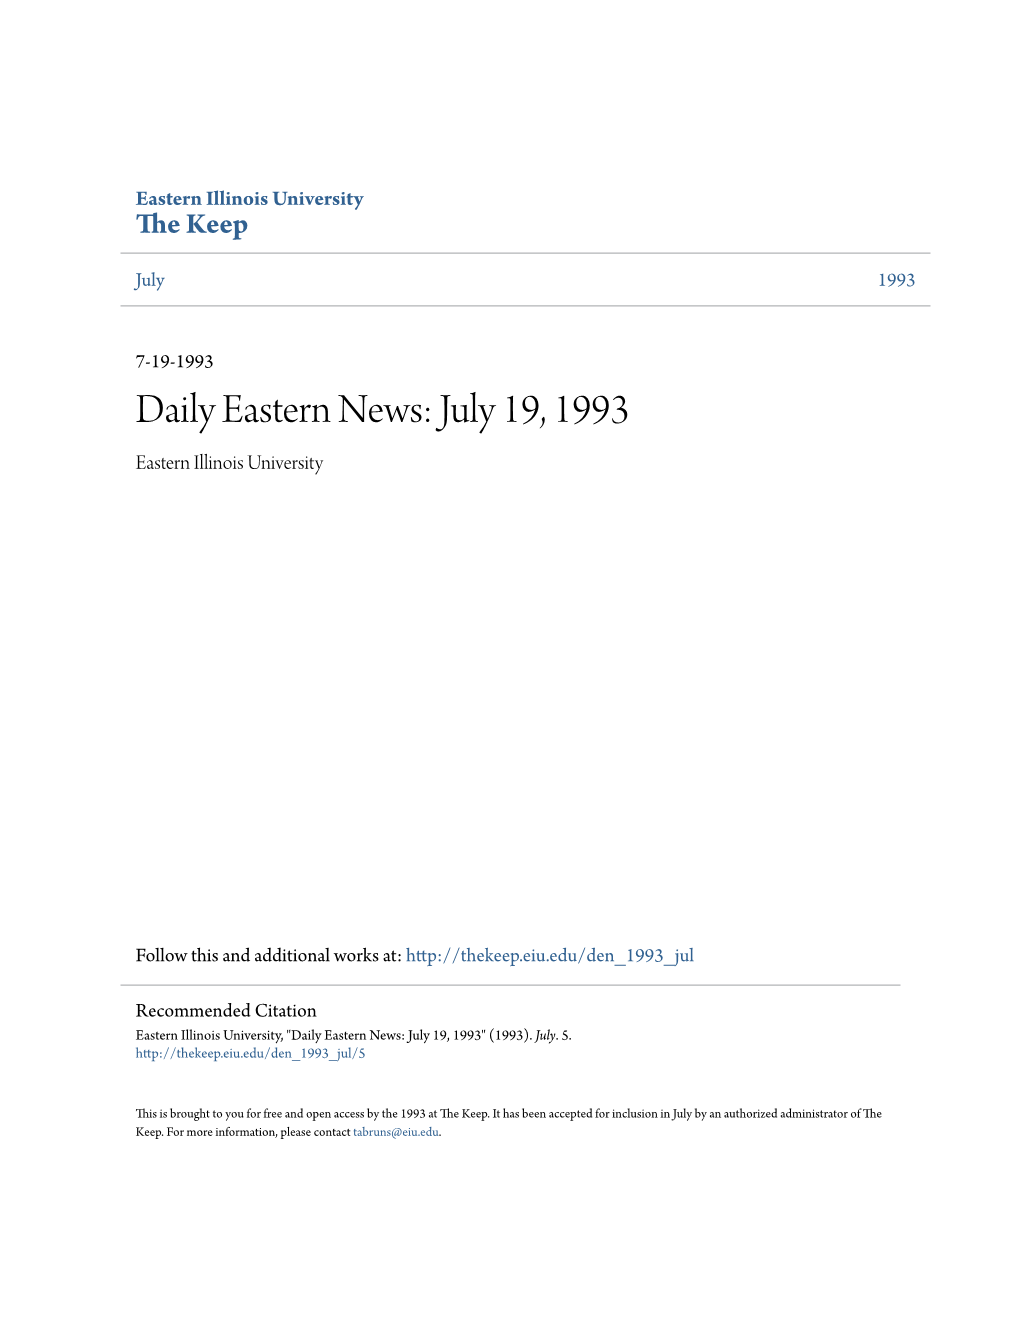 Daily Eastern News: July 19, 1993 Eastern Illinois University